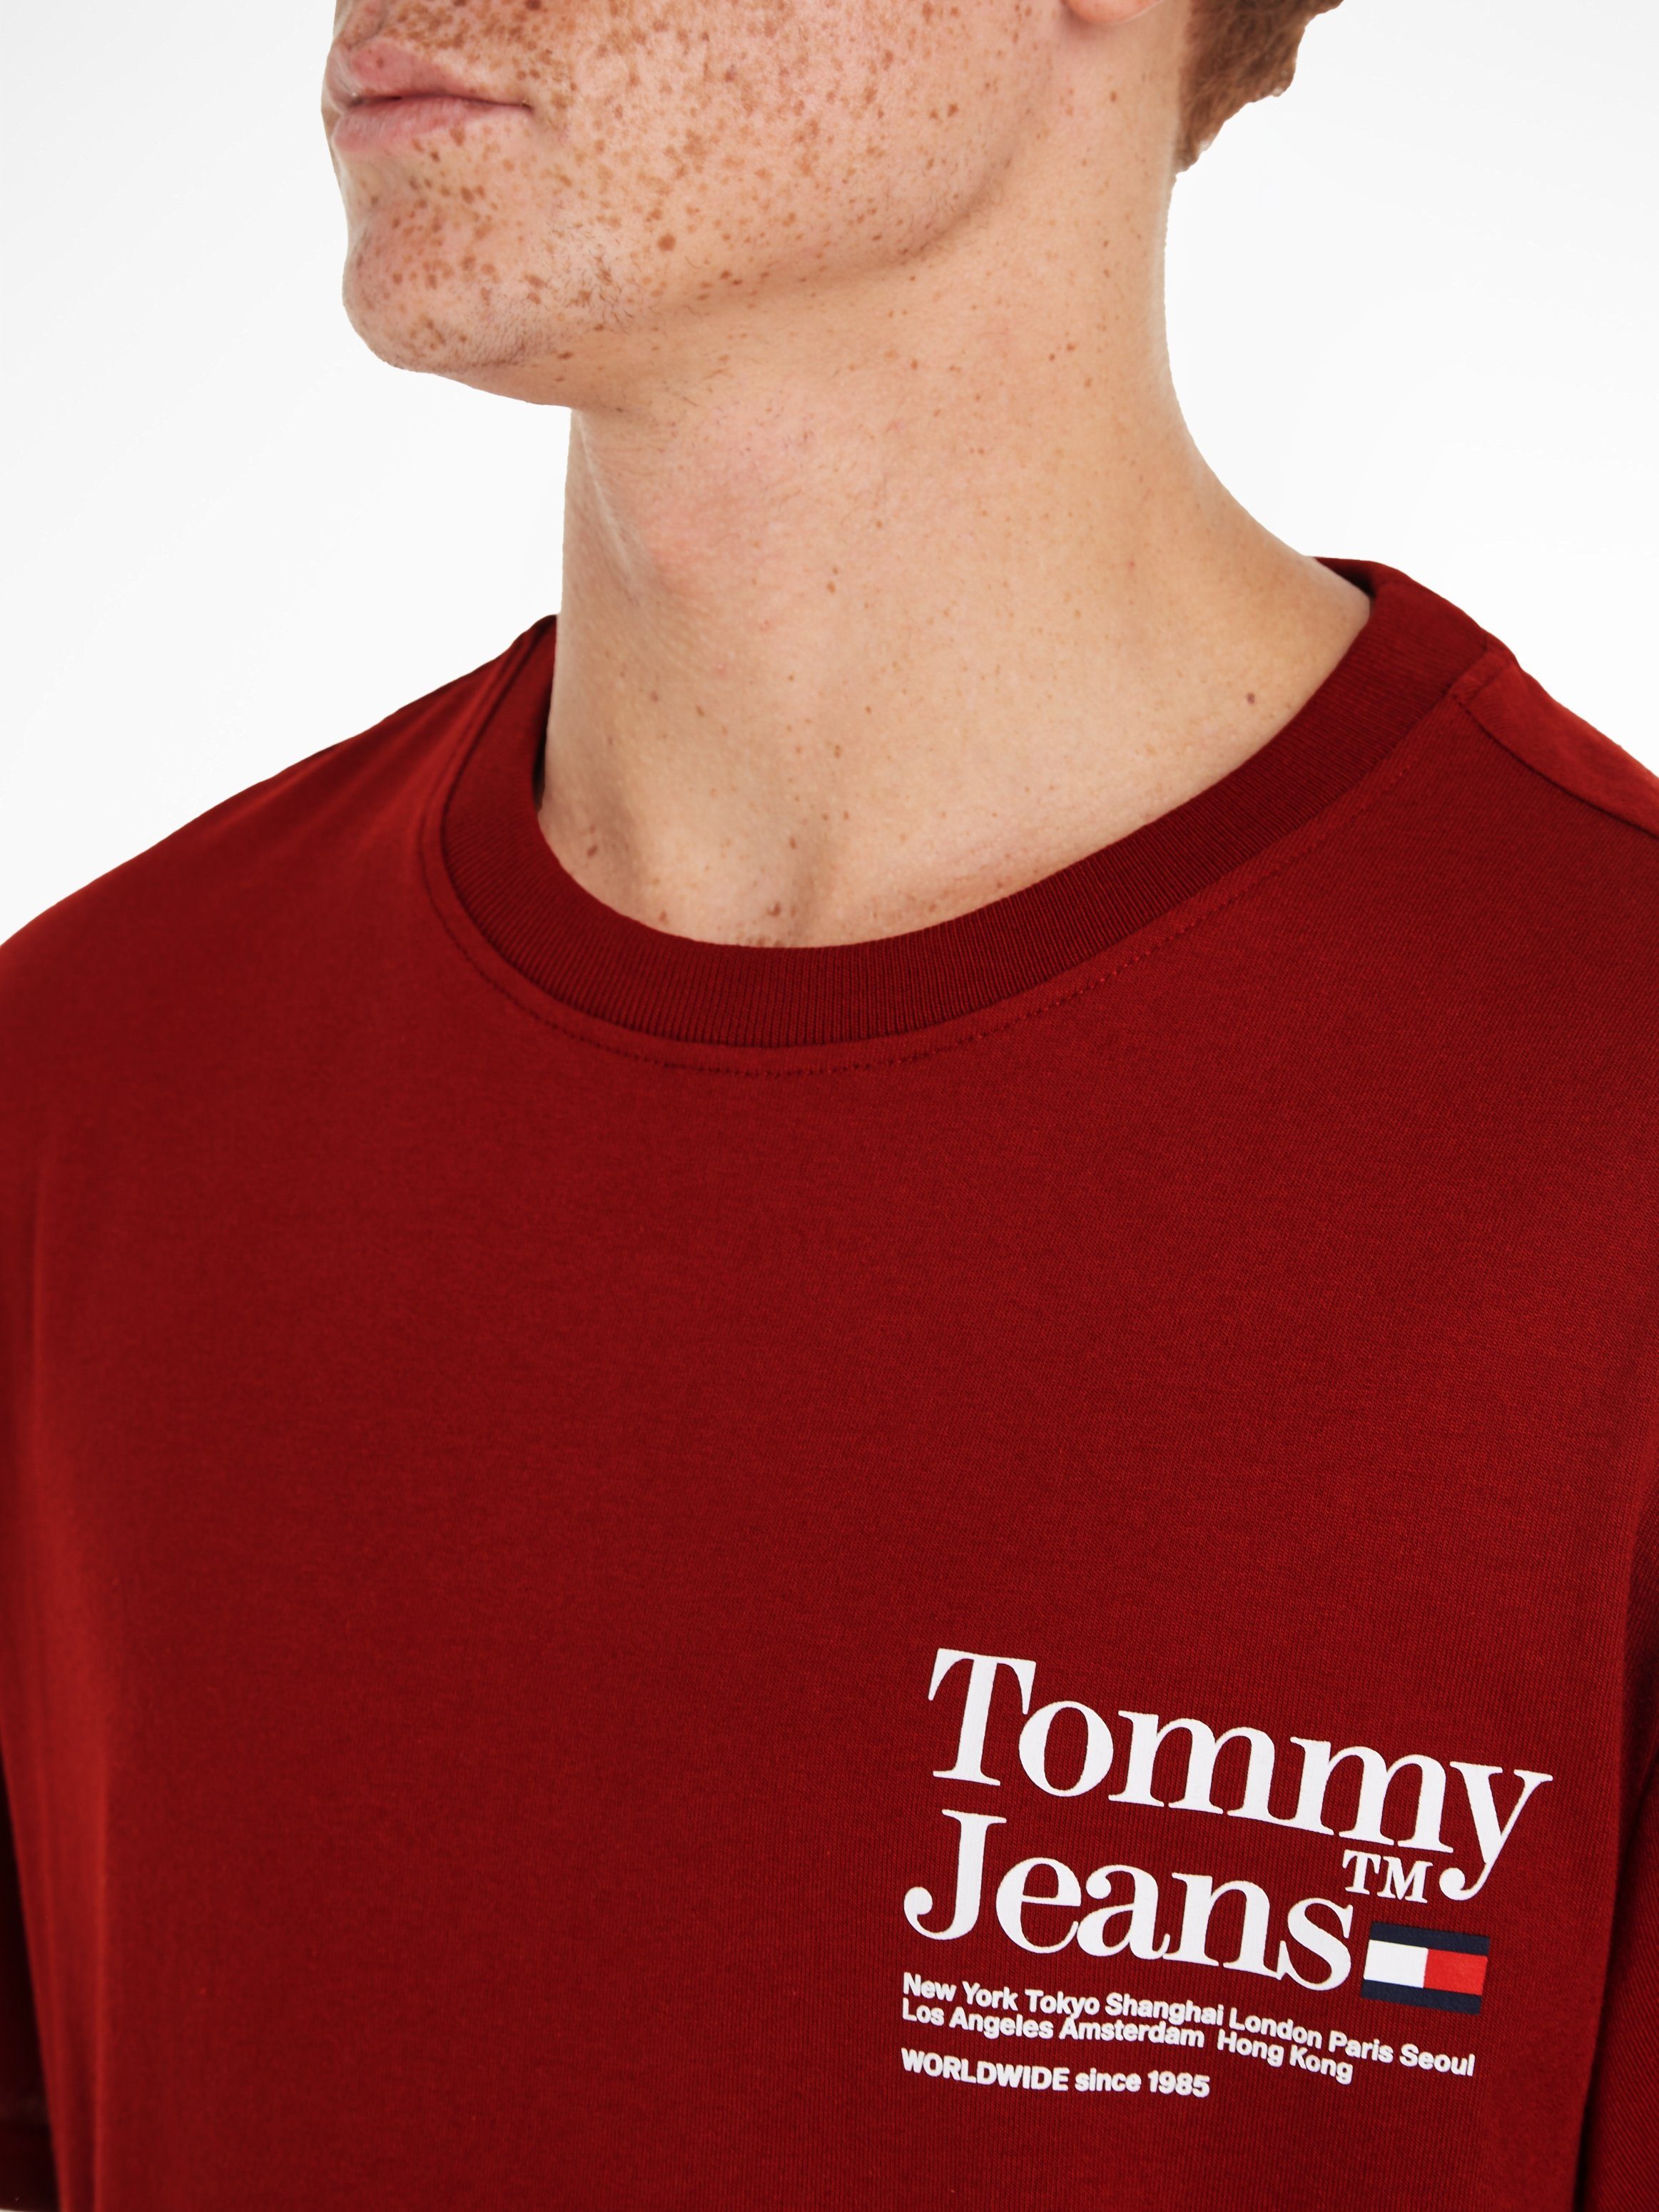 TOMMY JEANS T-shirt TJM REG MODERN TOMMY TM TEE